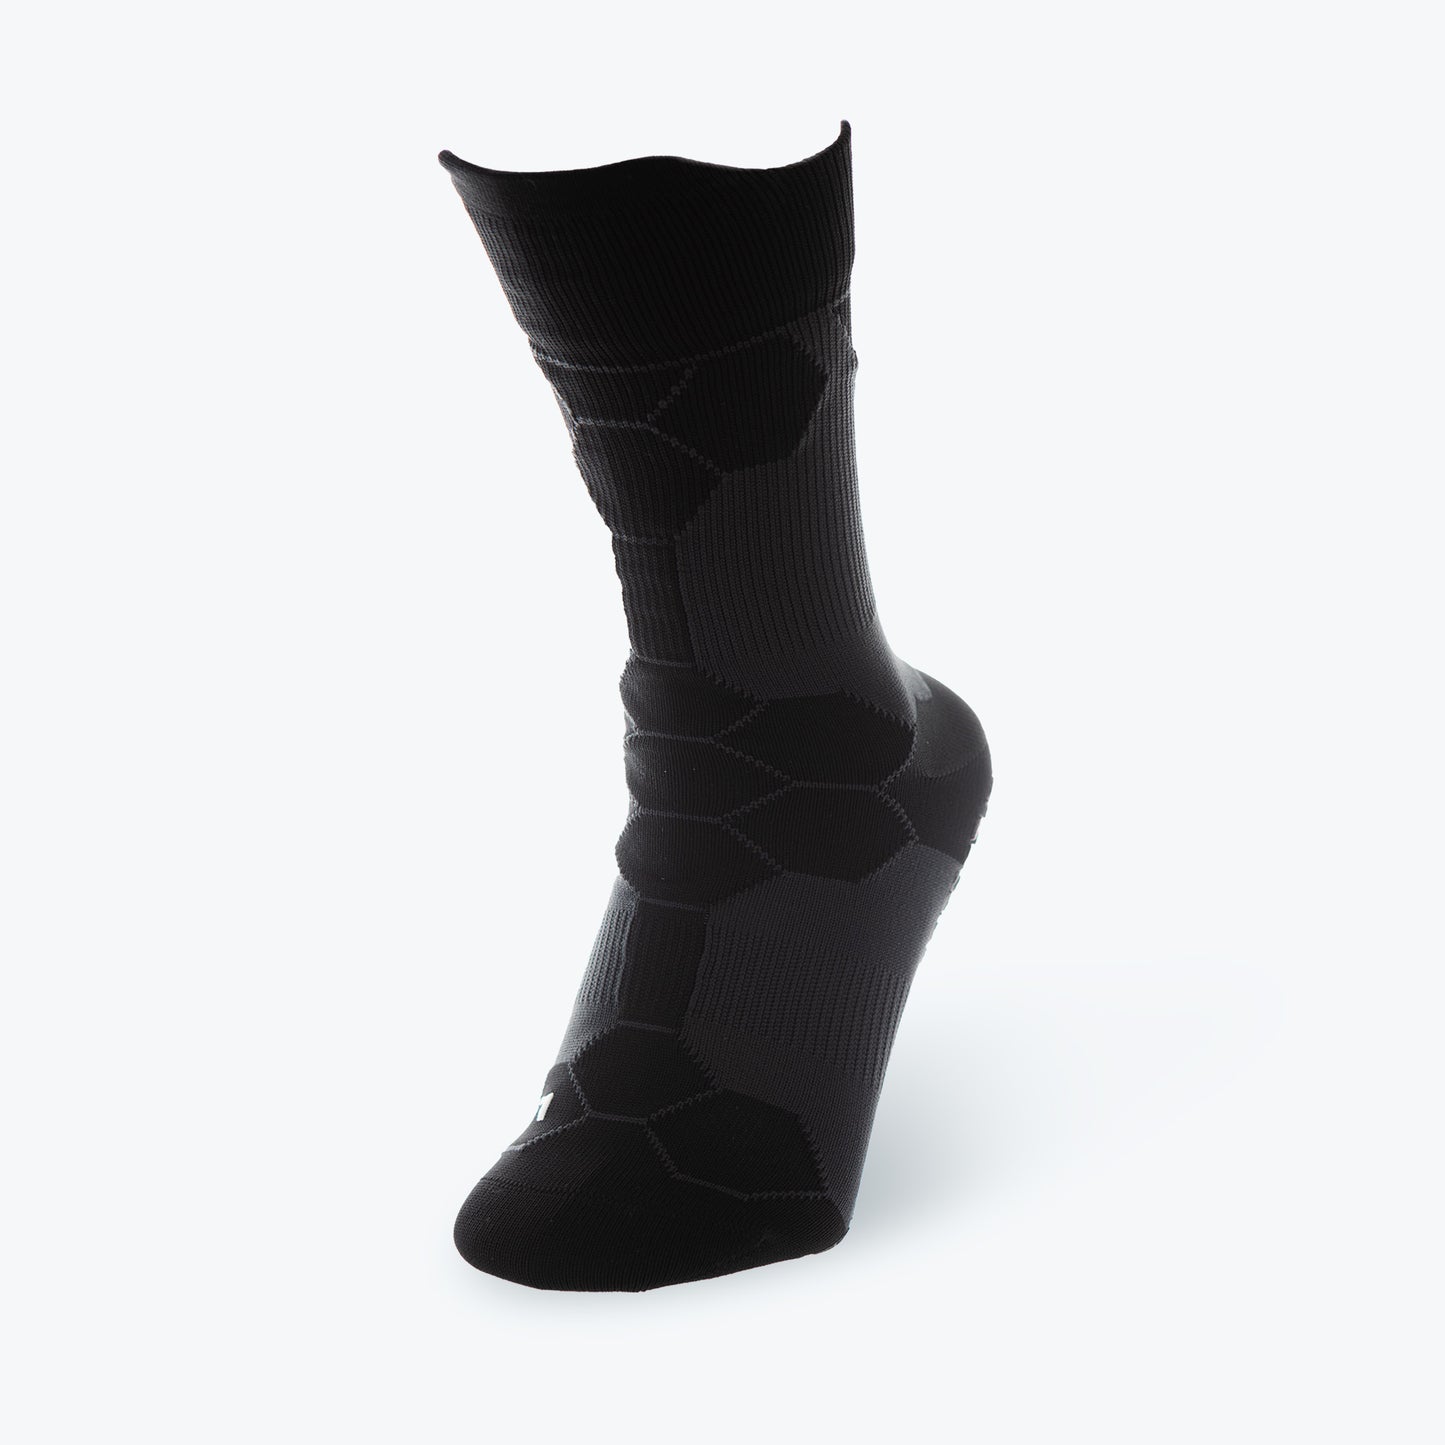 GripSoxx - Grip Socken in Black